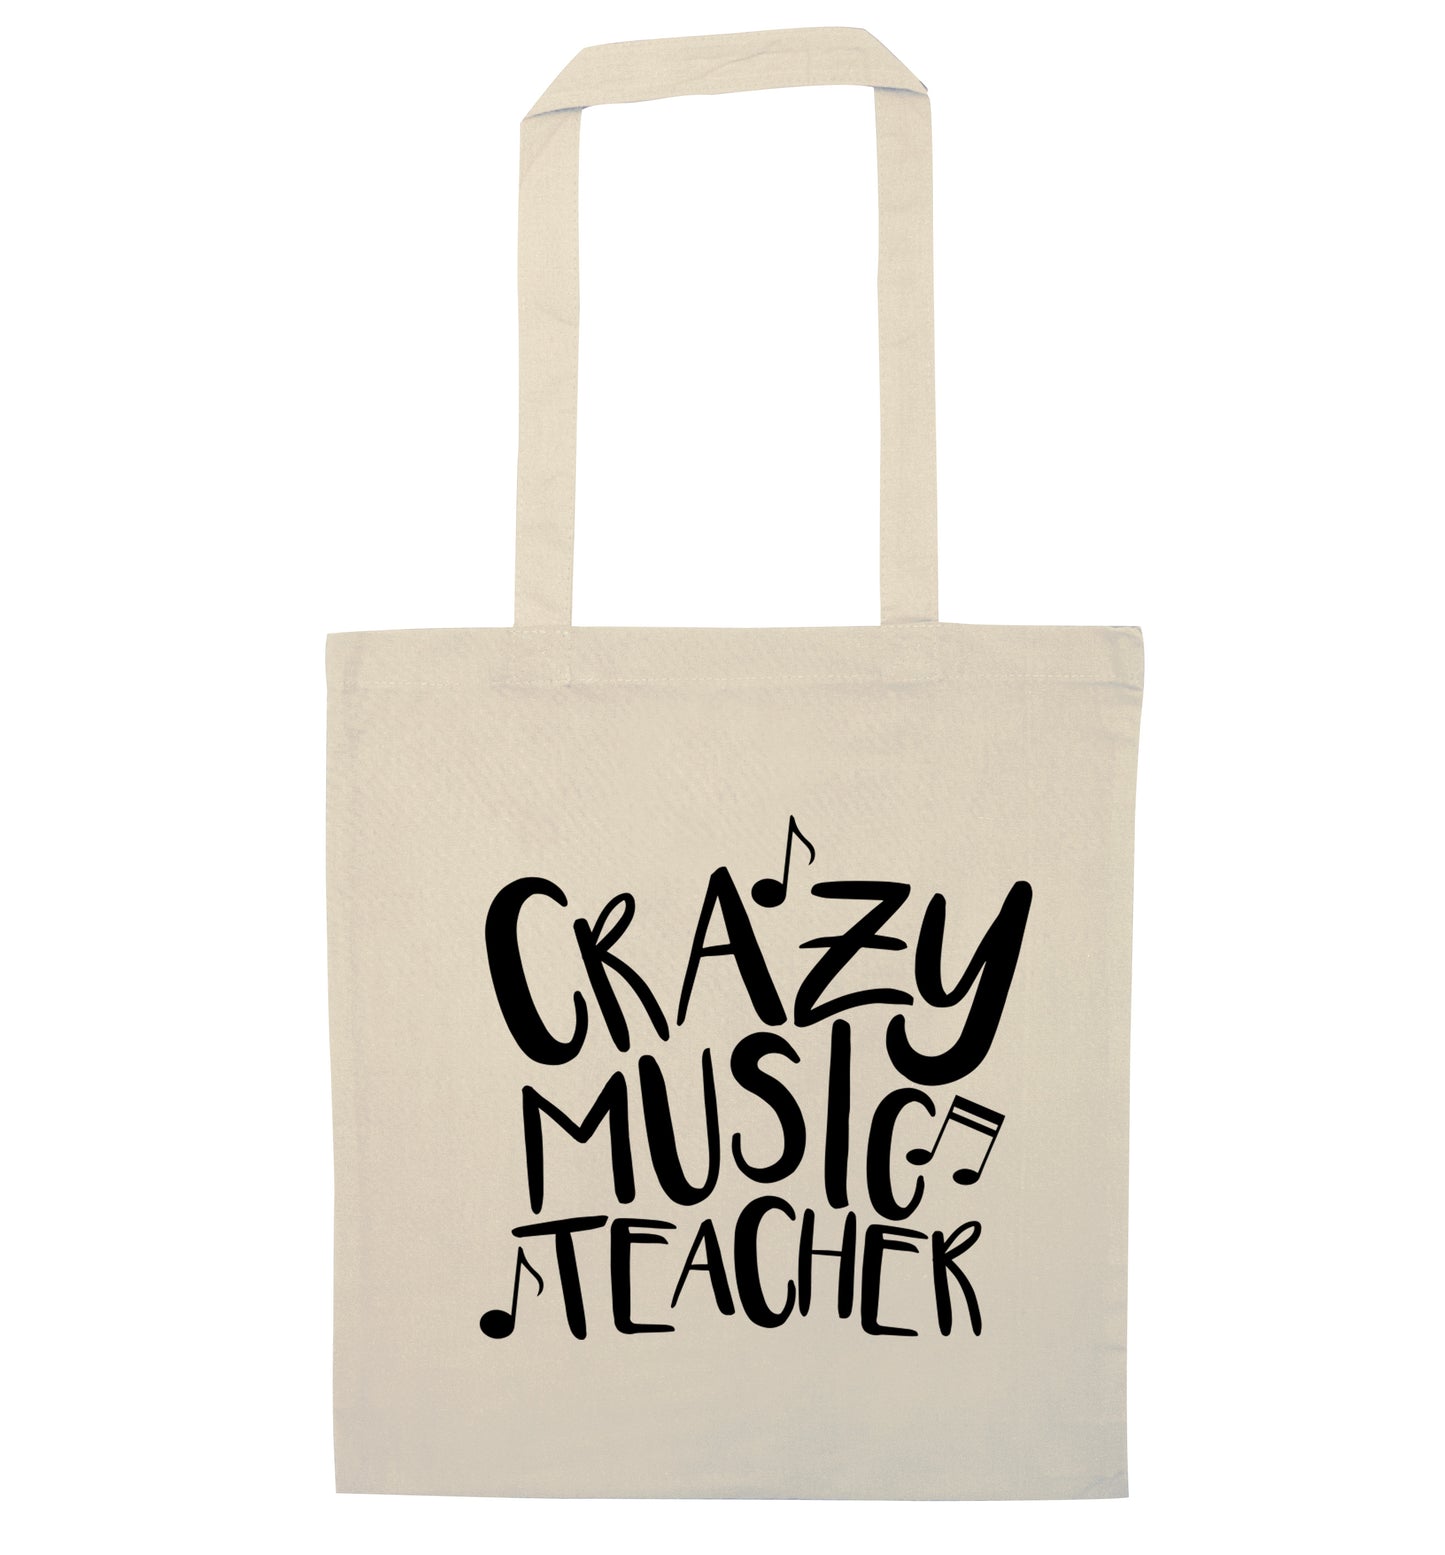 Crazy music teacher natural tote bag